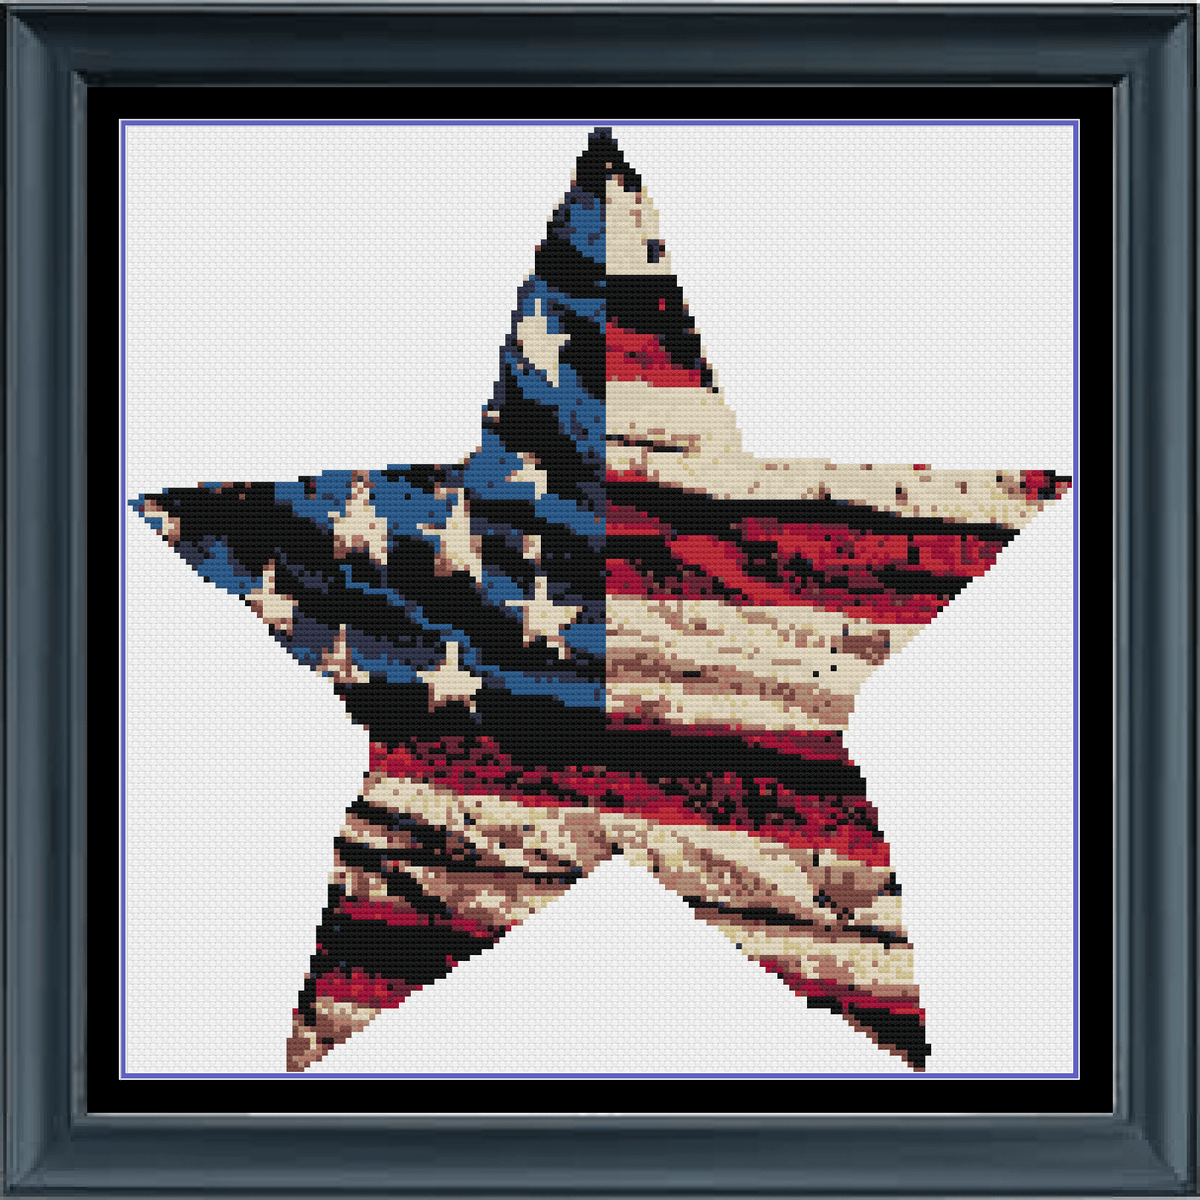 Stitching Jules Design Cross Stitch Pattern American Flag Star Cross Stitch Pattern | Instant PDF Download